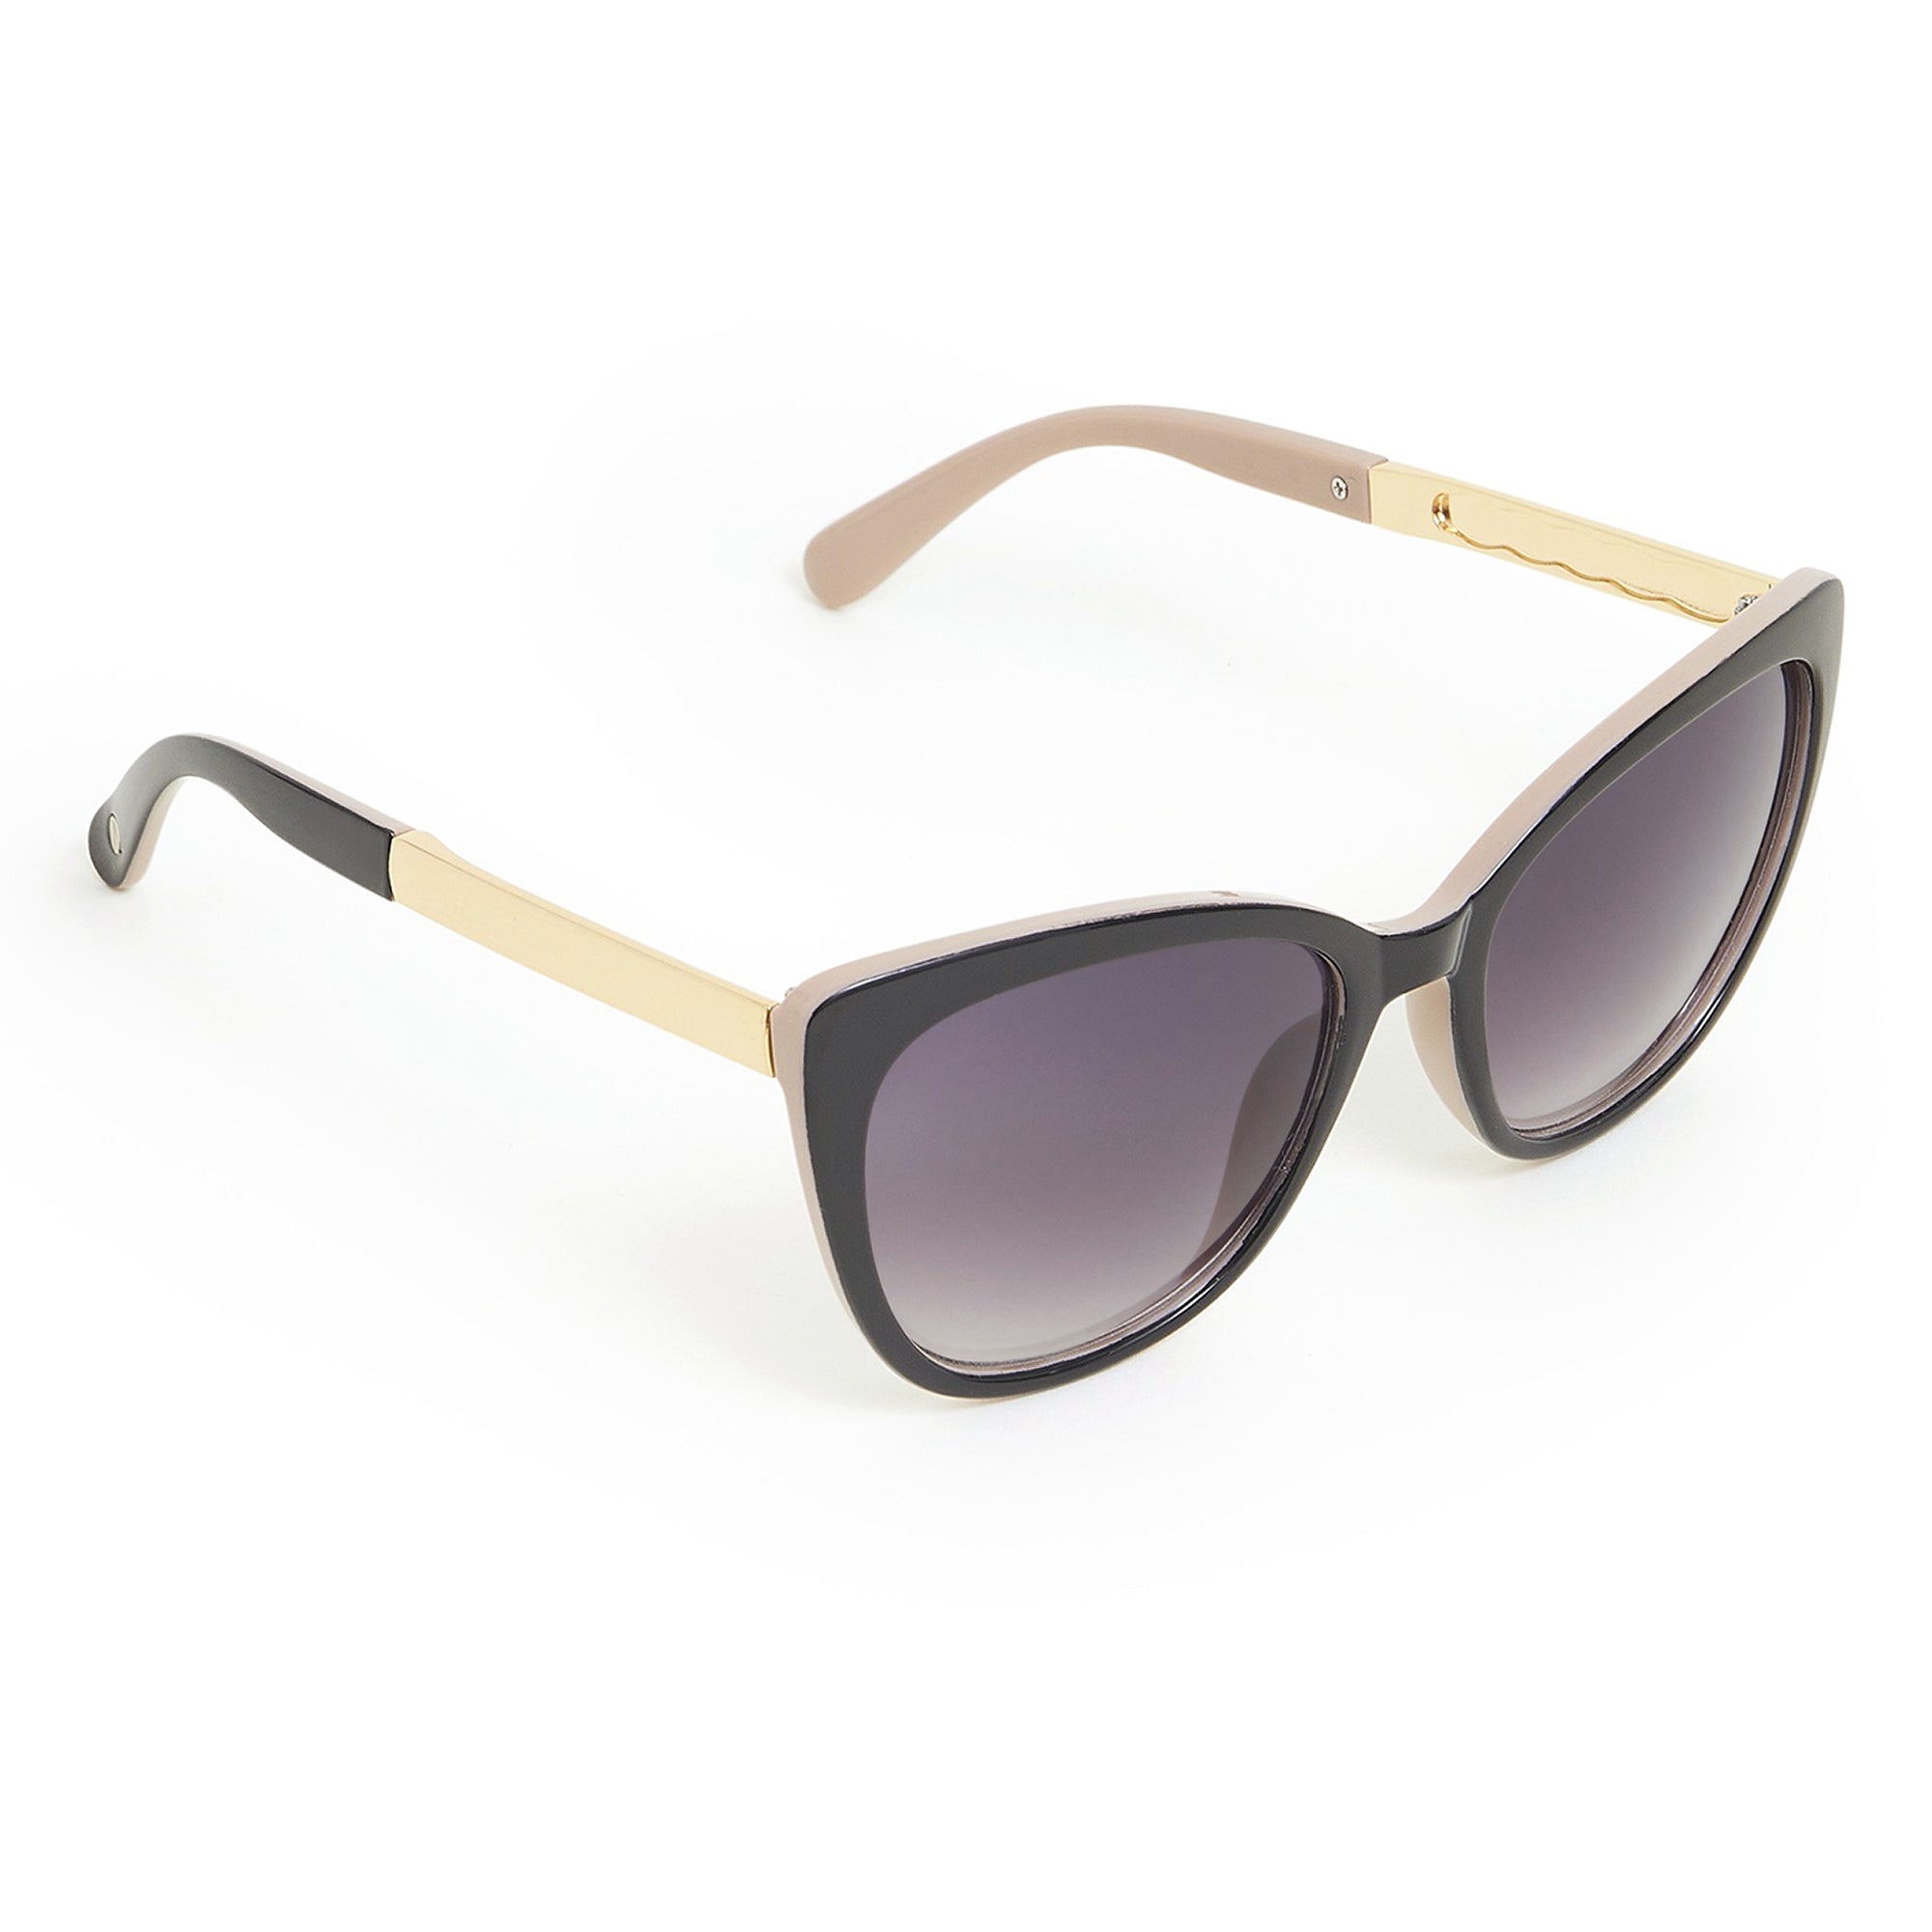 Black Classic Cateye Sunglasses Features